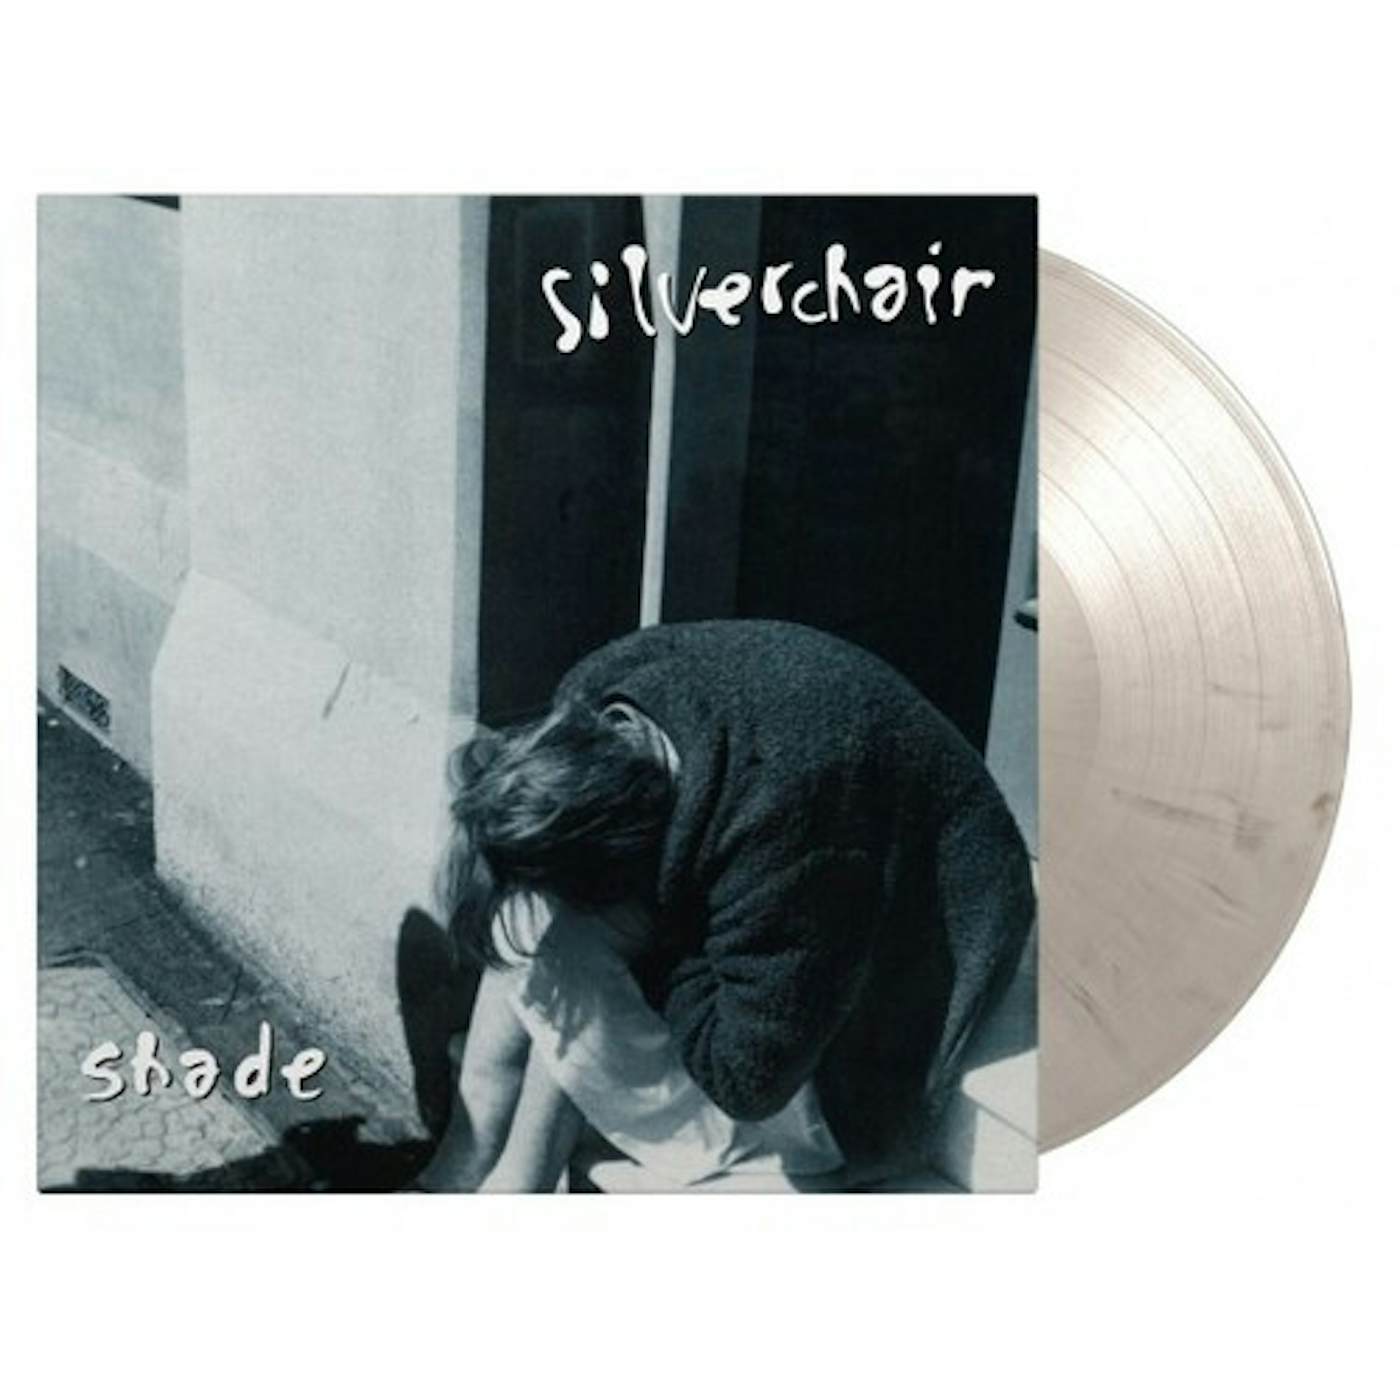 Silverchair Shade Vinyl Record